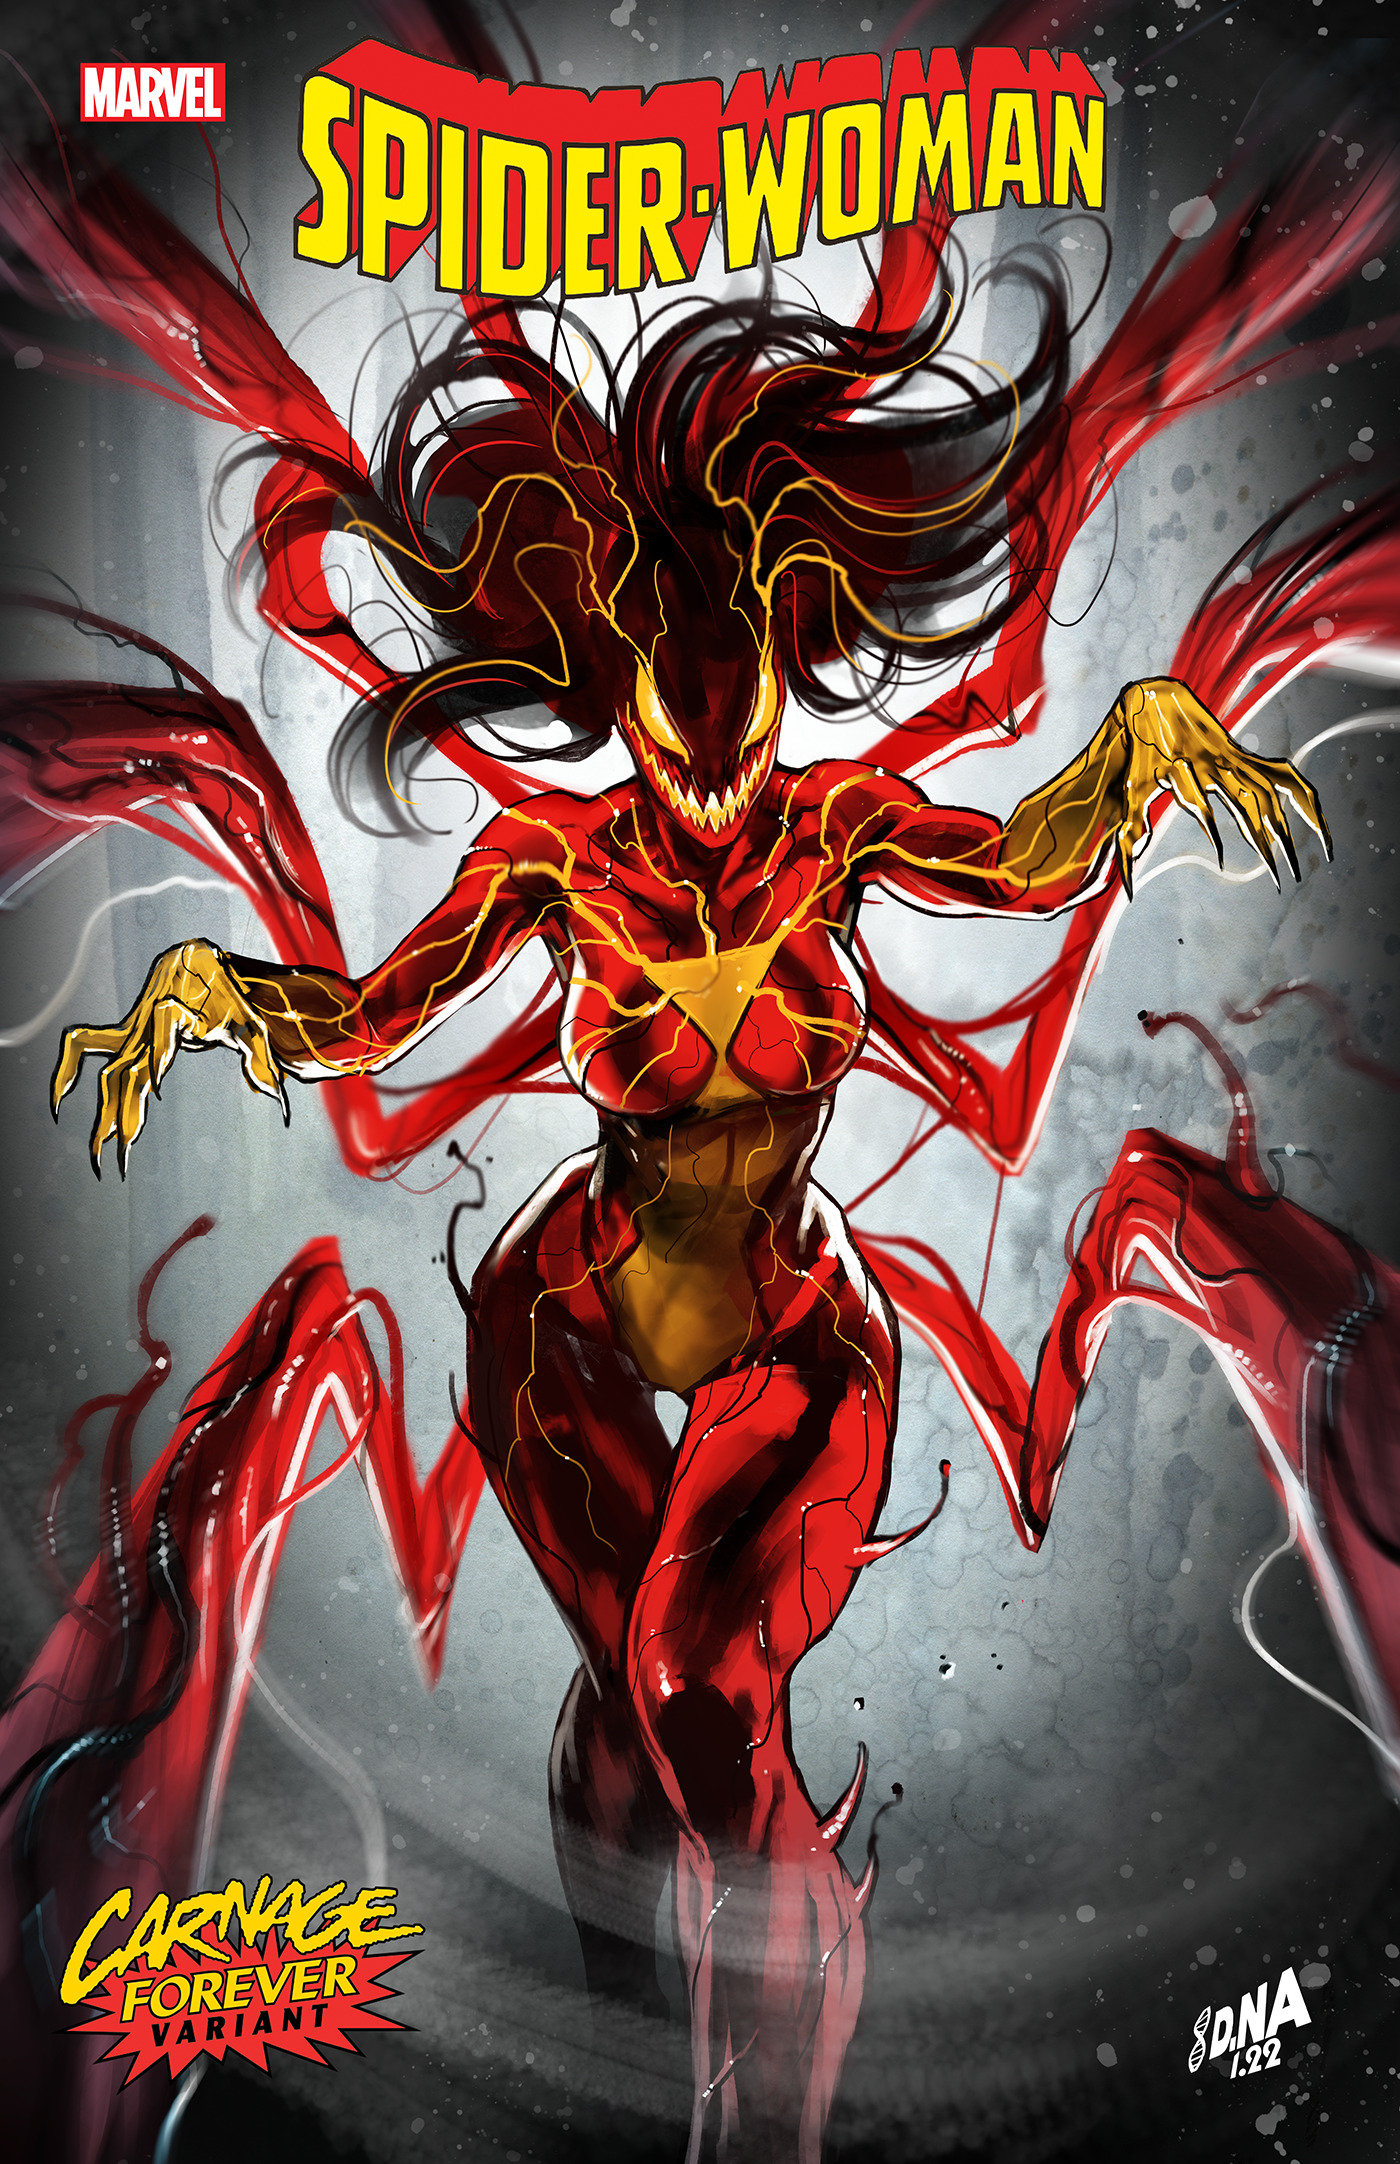 Spider-Woman #21 Nakayama Carnage Forever Variant (2020)